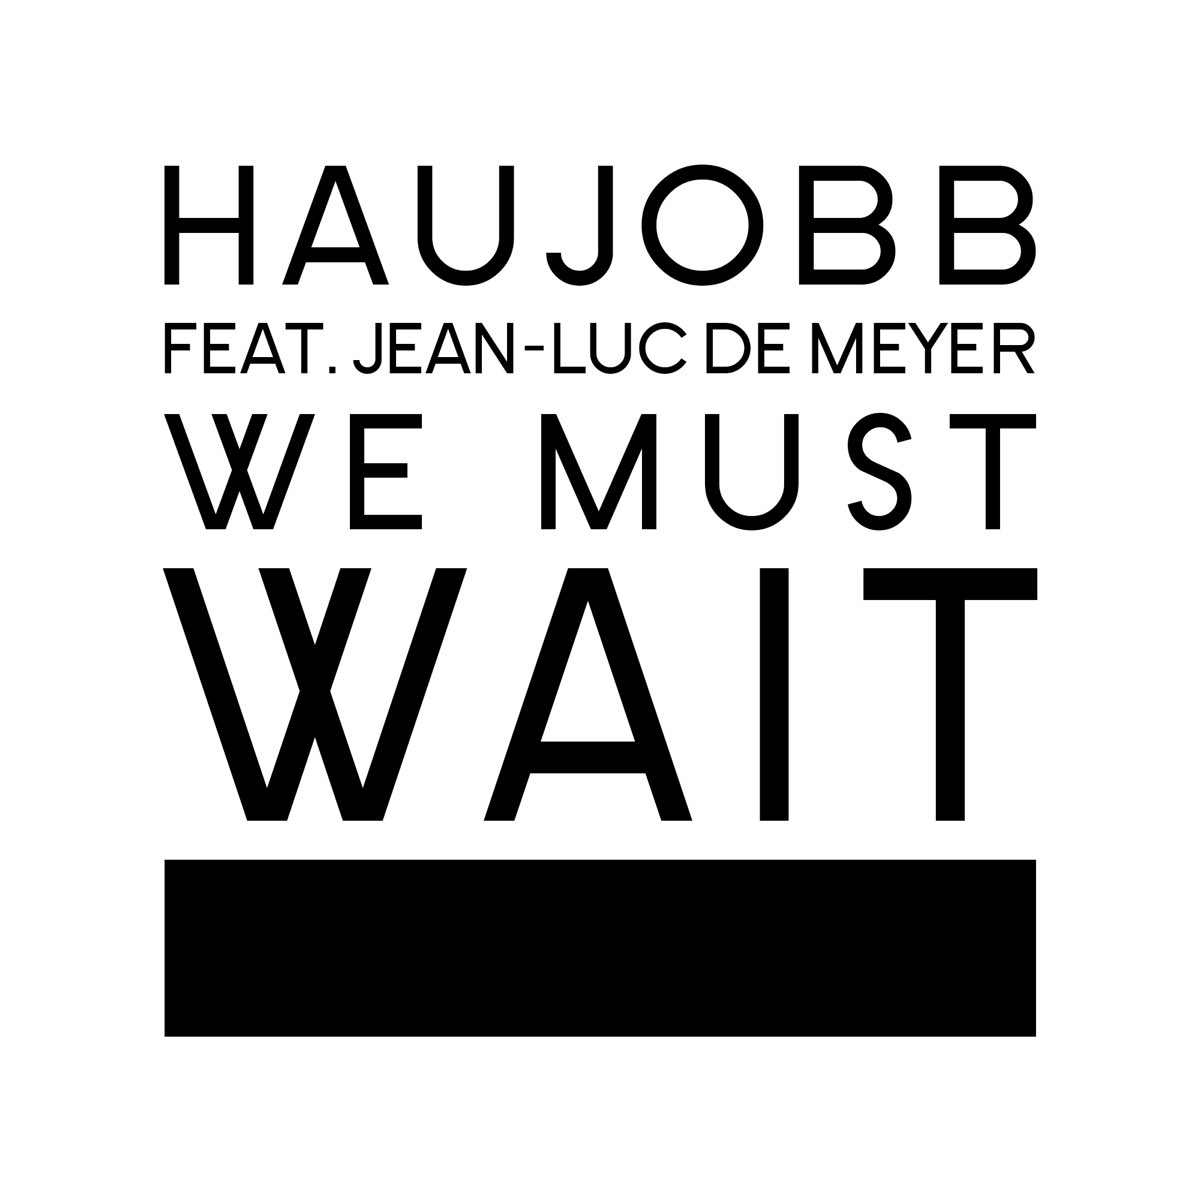 Must be waiting. Haujobb. We must wait. Даниэль Майер Haujobb. Haujobb solutions for a small Planet.